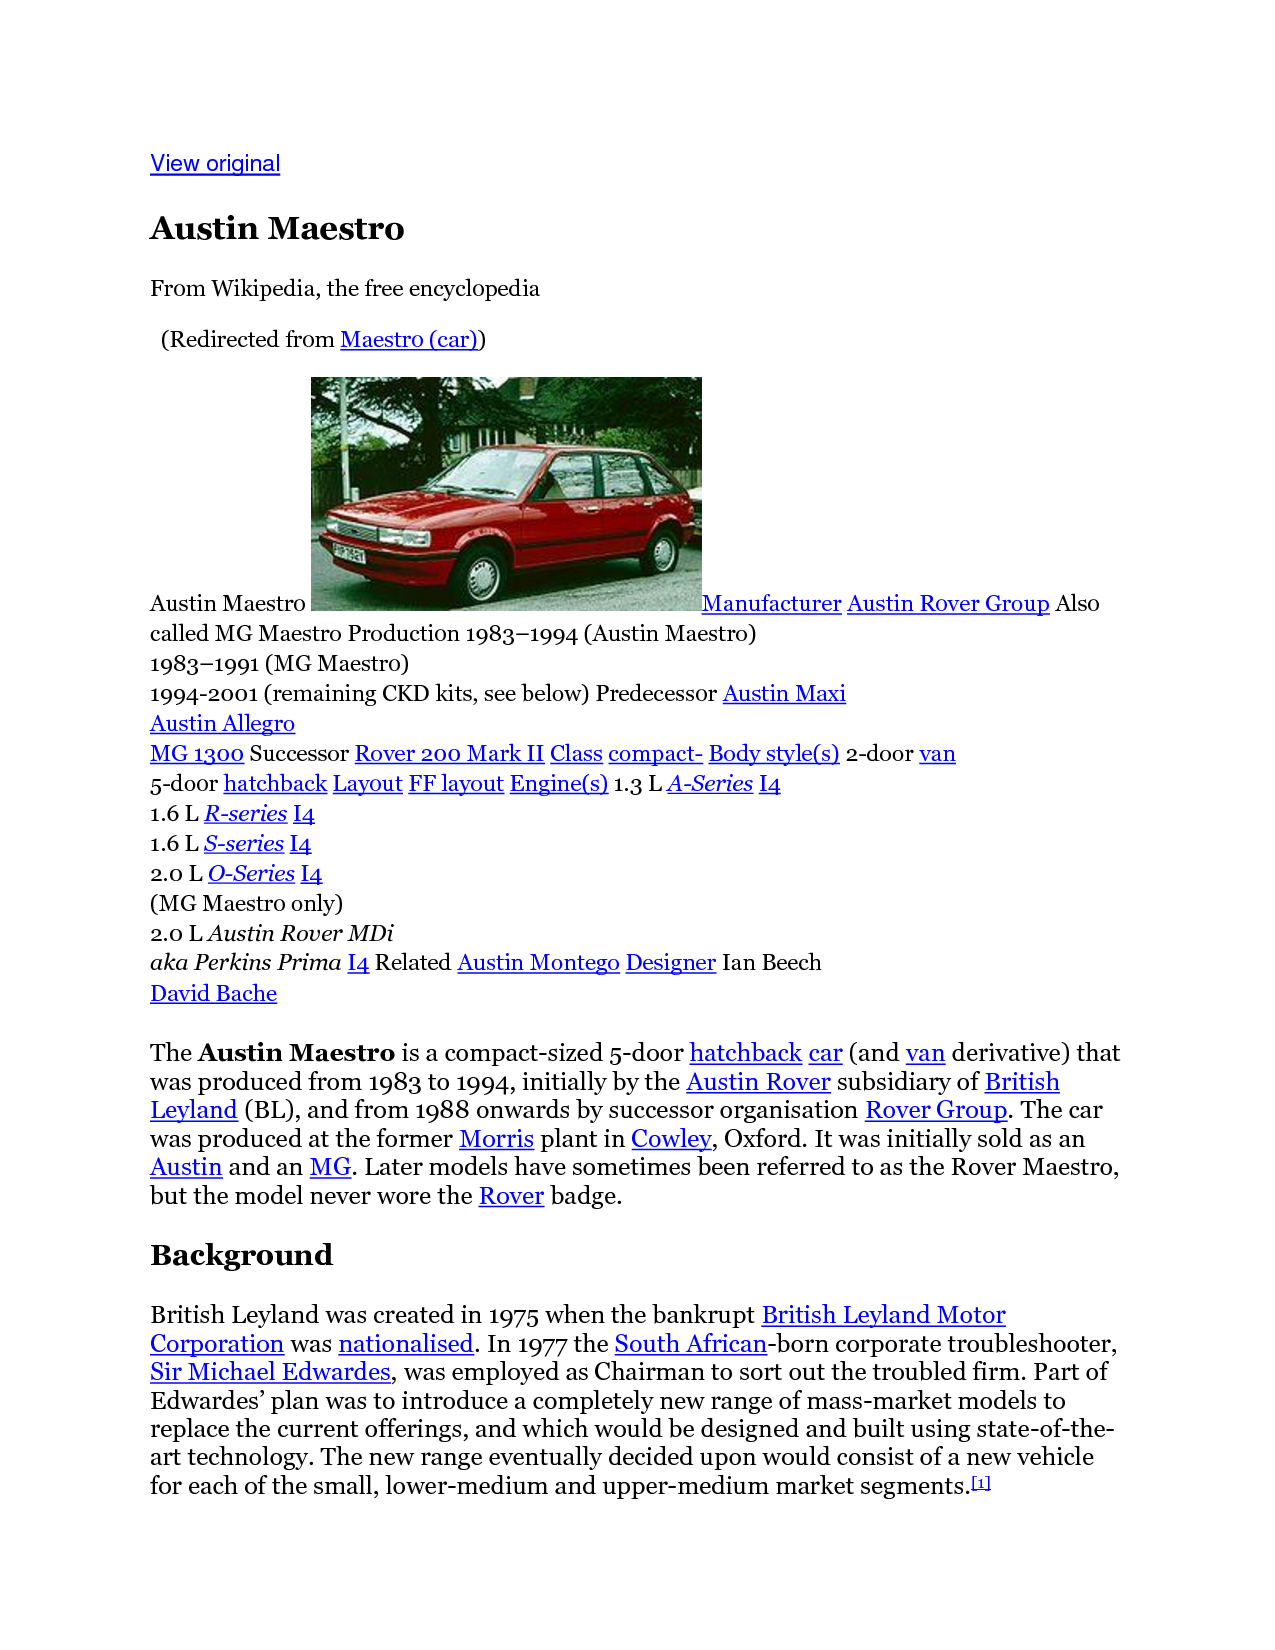 Austin Montego 1.6 L